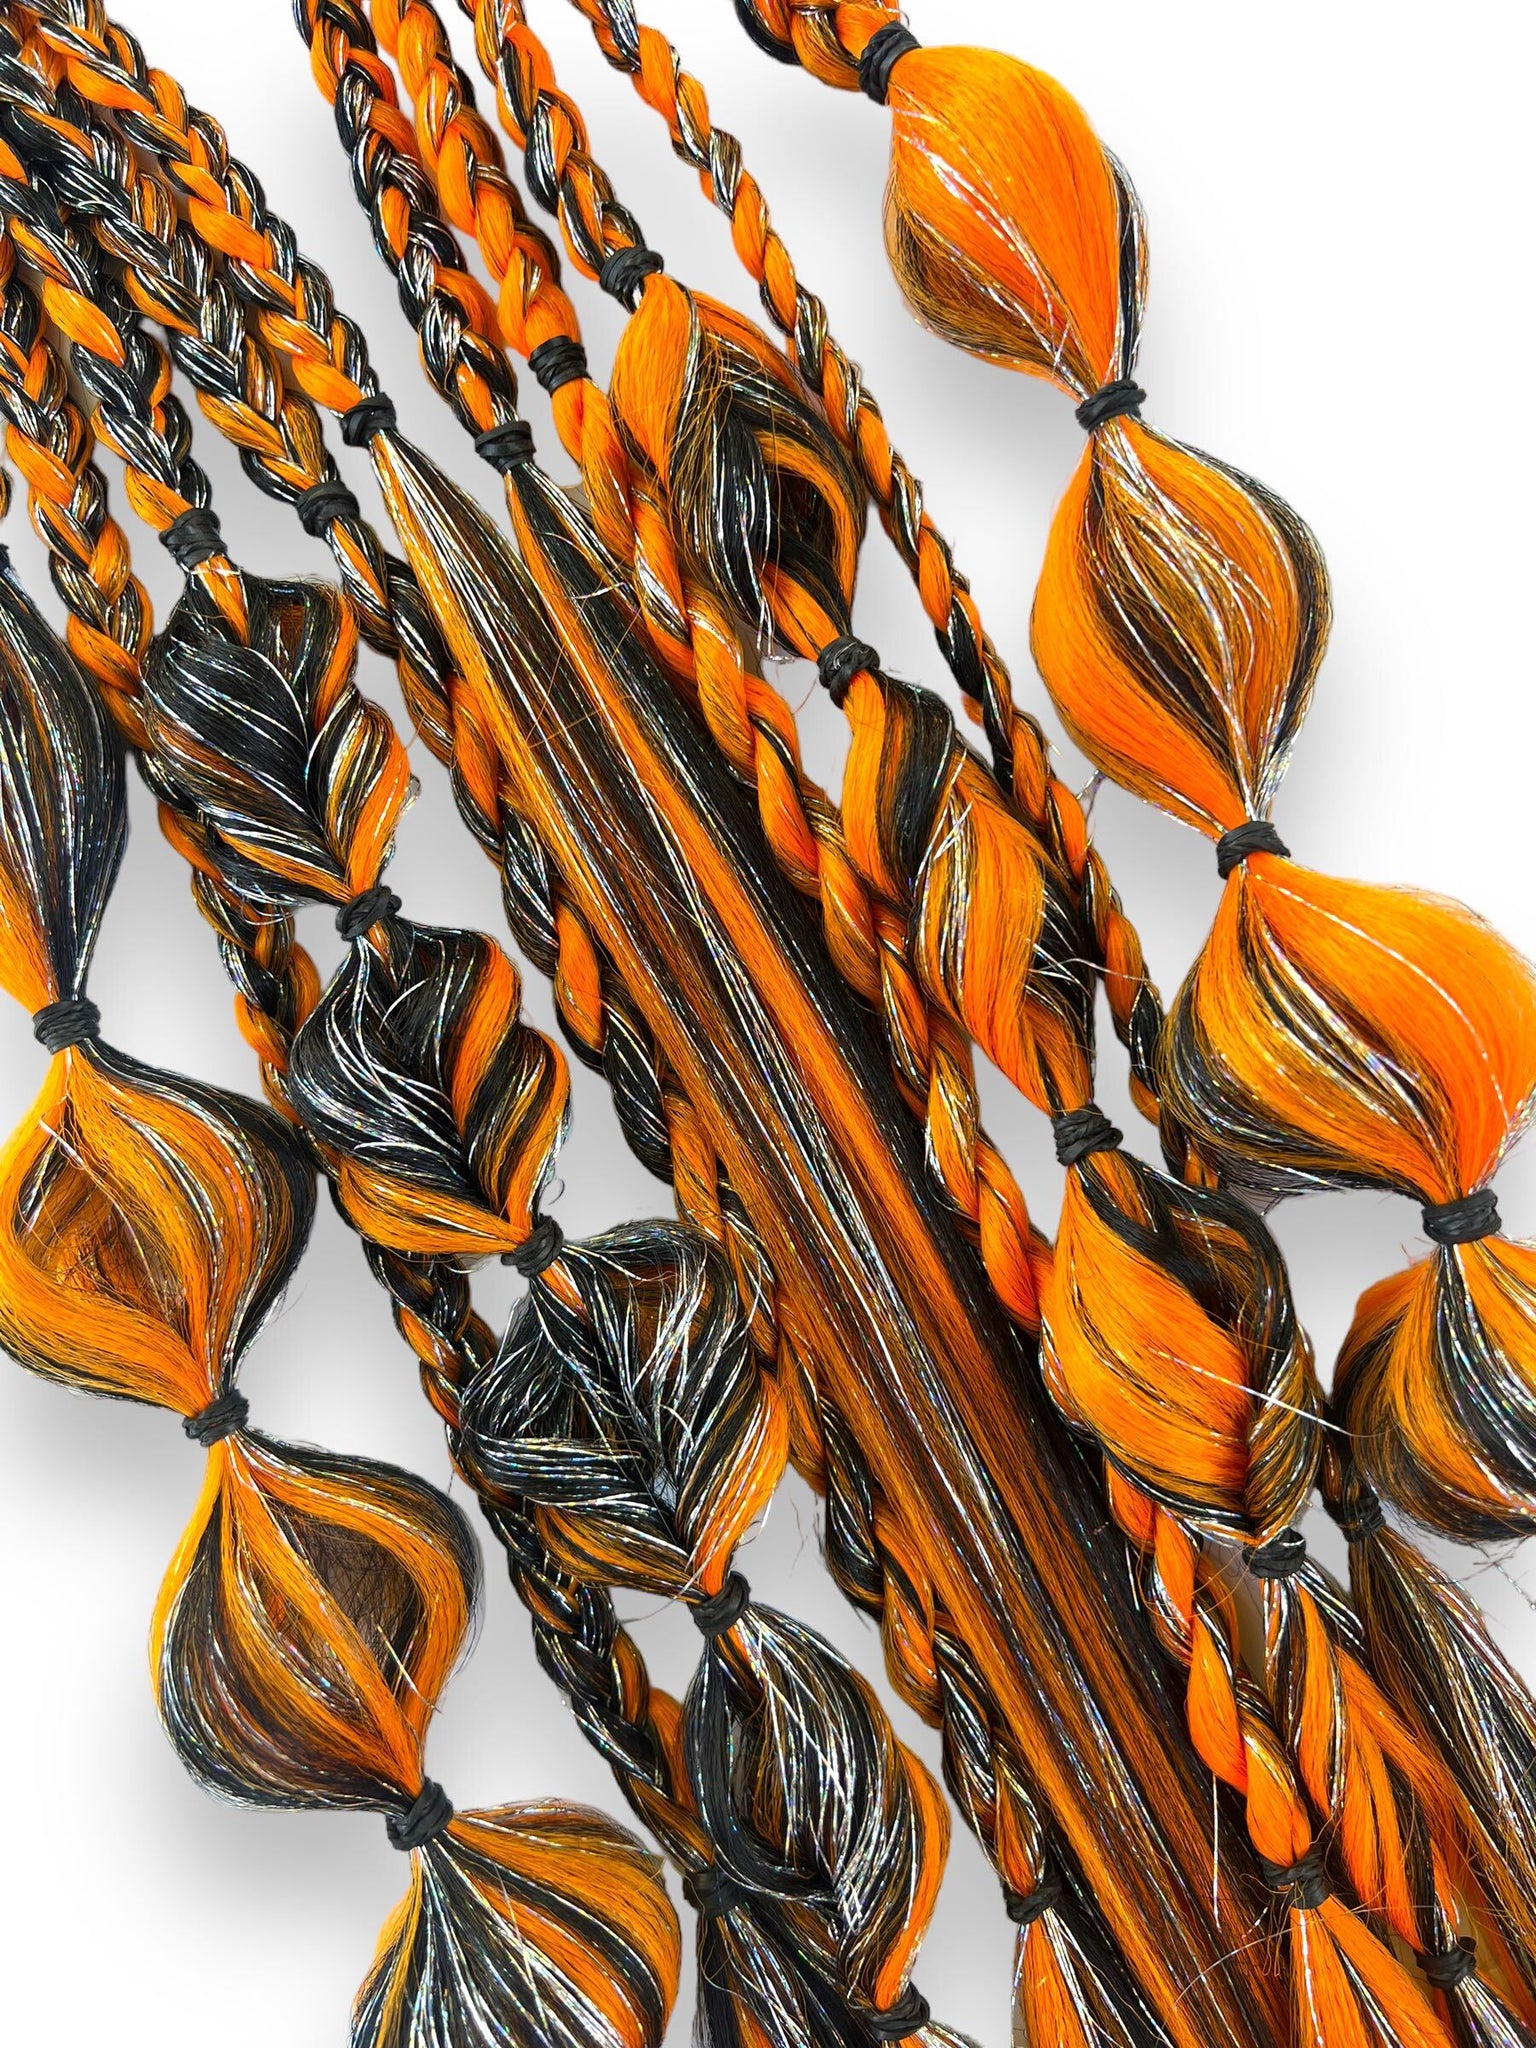 Black & Orange SPORTS - Tie-In Braid Extension Set of 2